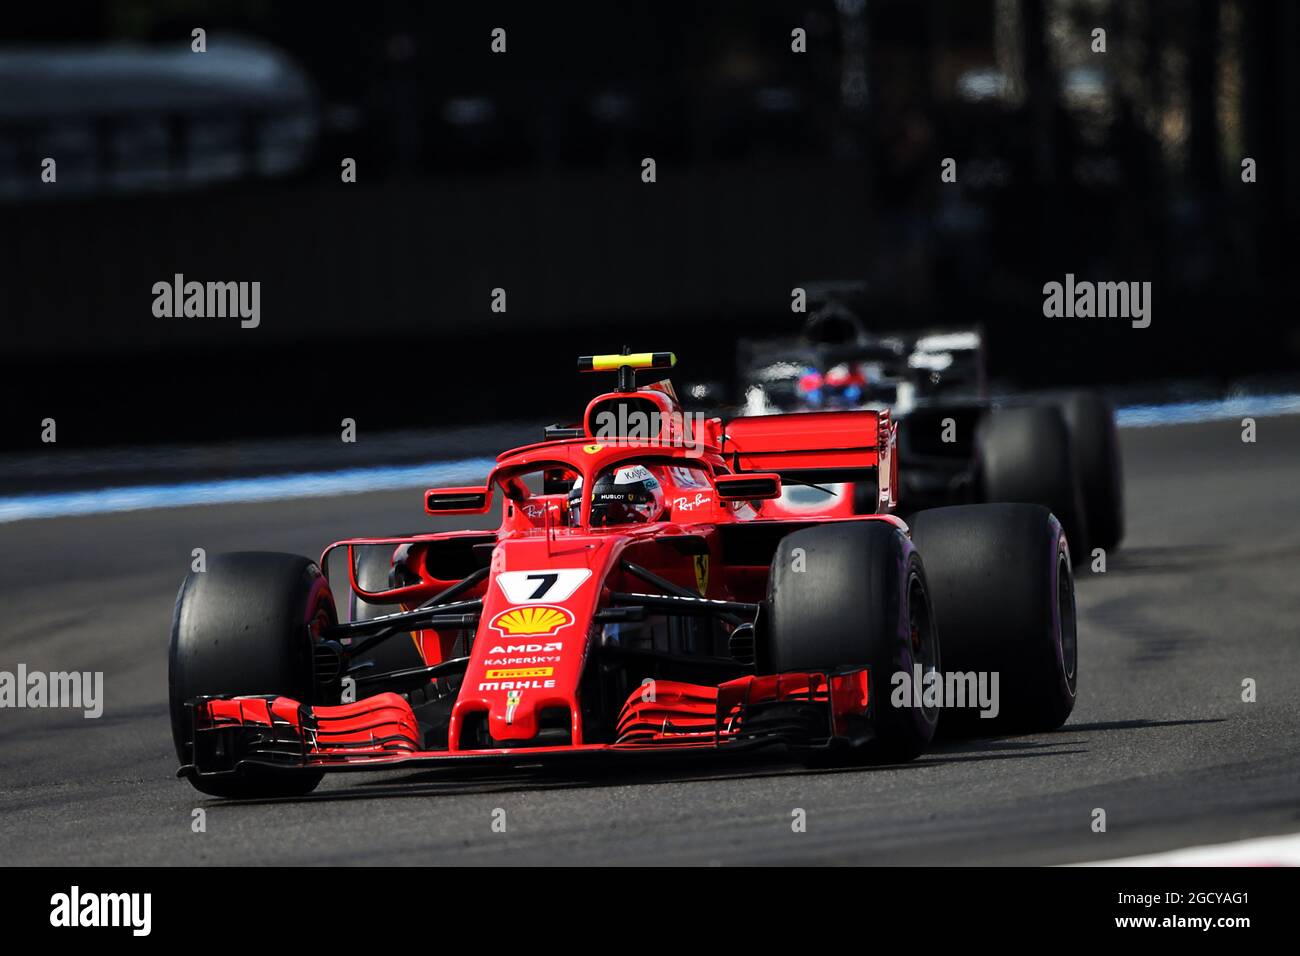 Kimi Raikkonen (FIN) Ferrari SF71H. French Grand Prix, Sunday 24th June 2018. Paul Ricard, France. Stock Photo